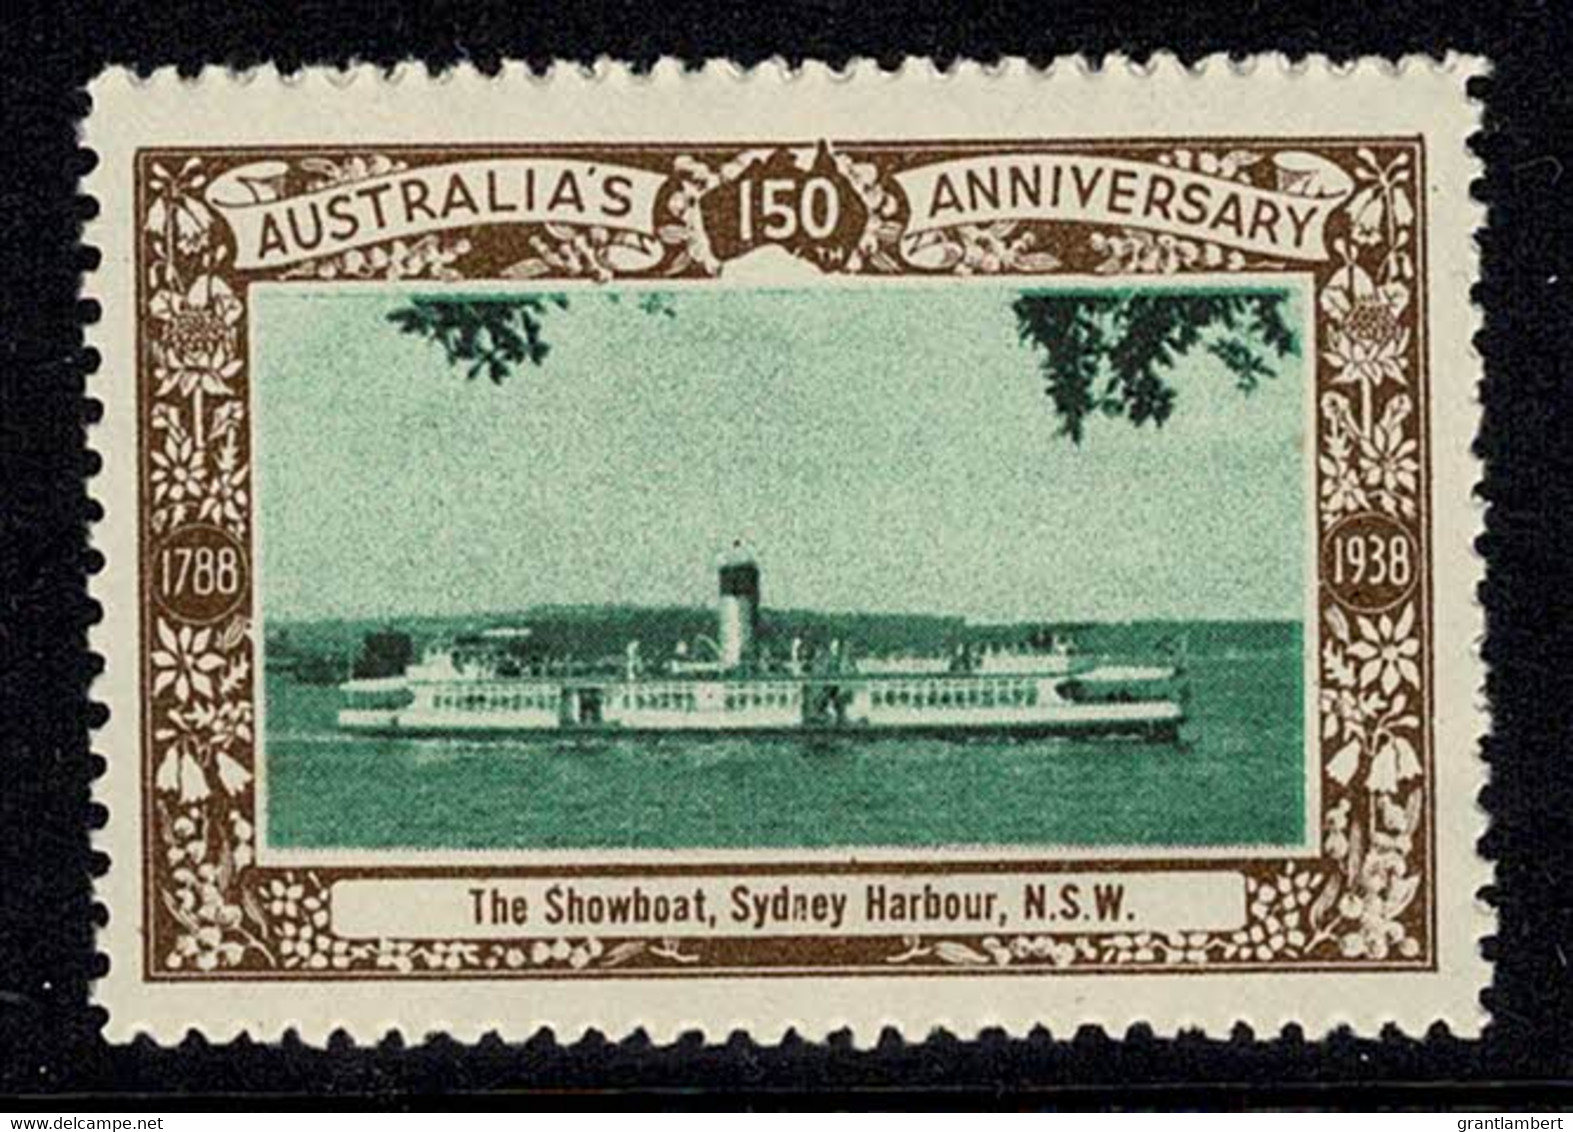 Australia 1938 The Showboat, Sydney Harbour - NSW 150th Anniversary Cinderella MNH - Cinderella